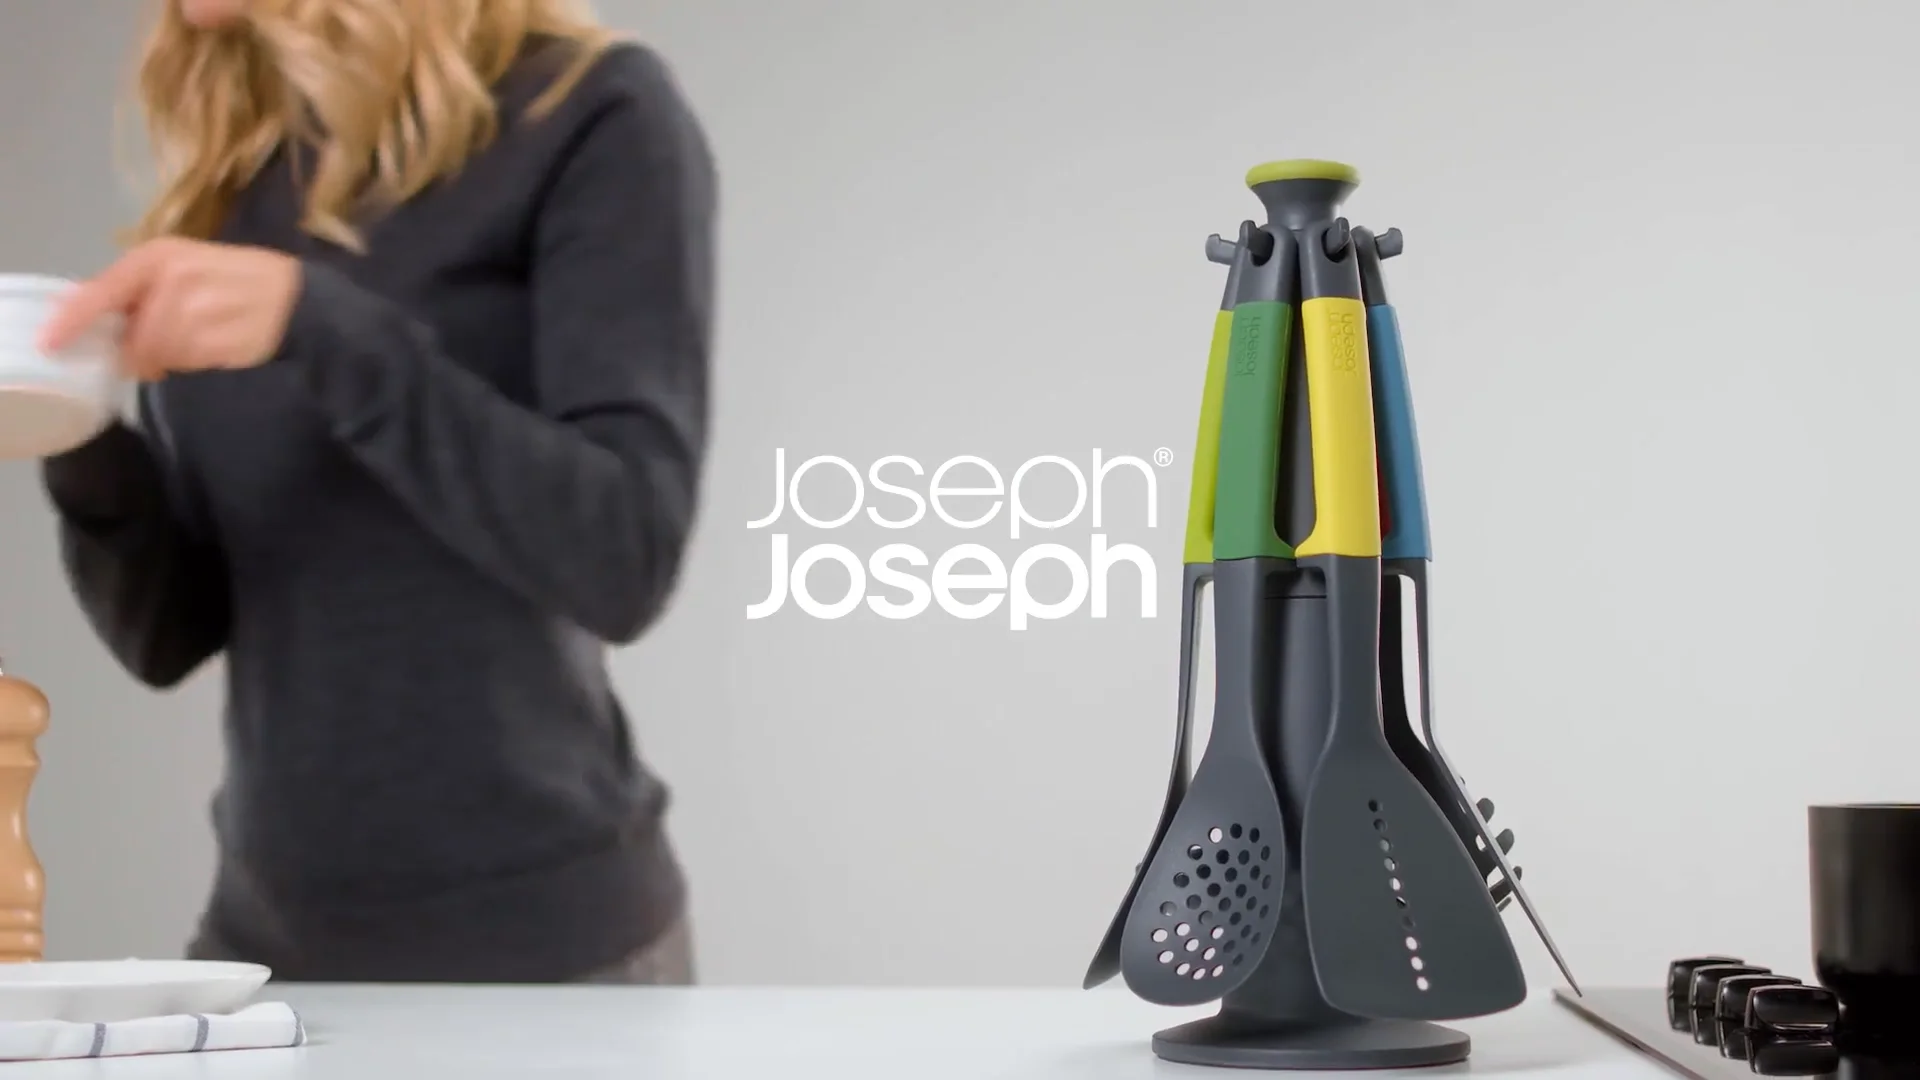 Joseph joseph - Doorstore elevate kitchen aid set